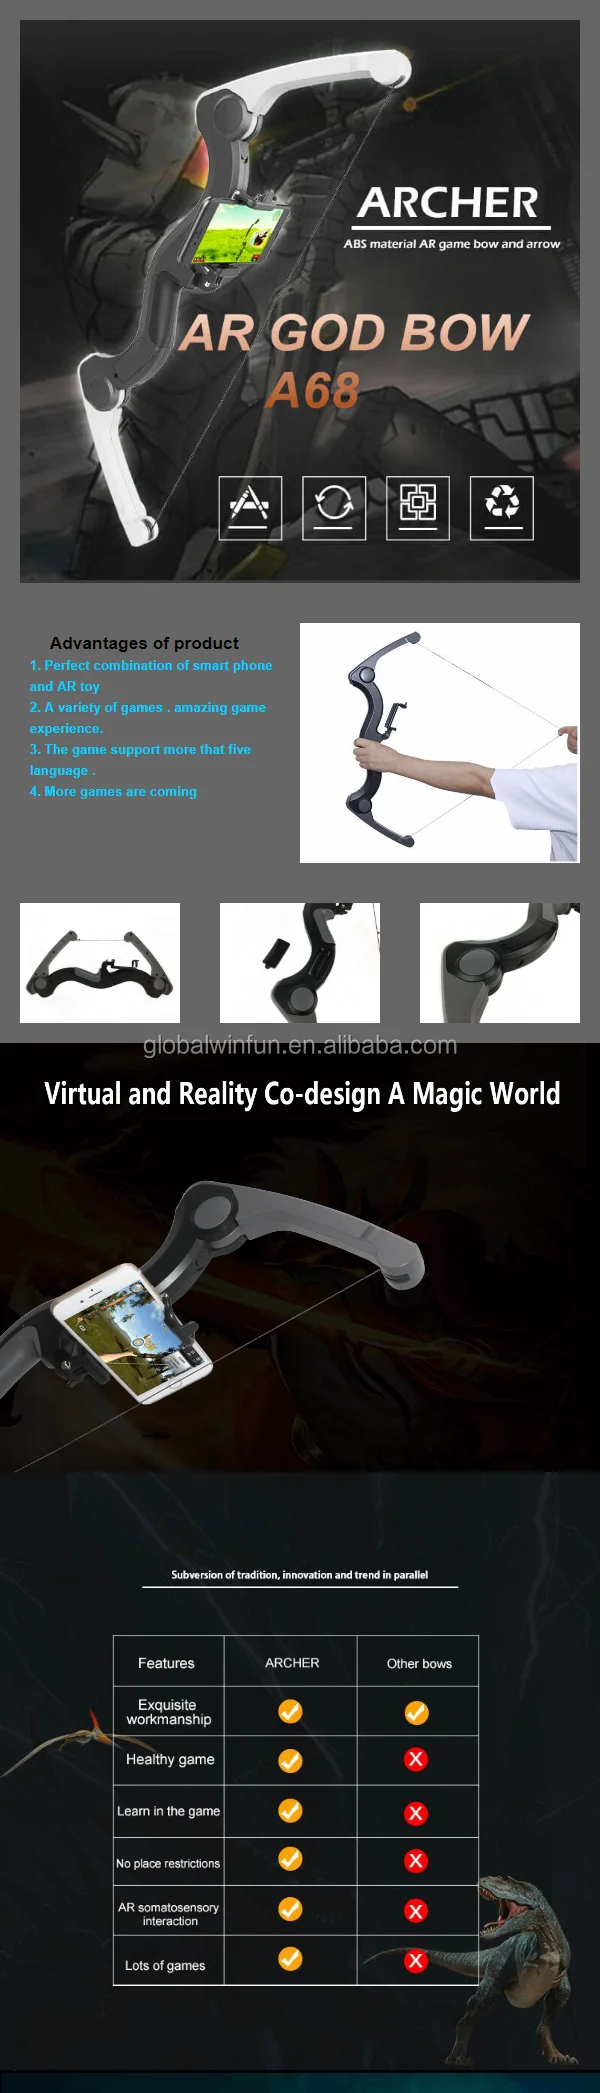 最新款式3d Vr 游戏塑料材料玩具ar 游戏弓 Buy Ar 玩具 Vr 游戏 Ar 弓product On Alibaba Com